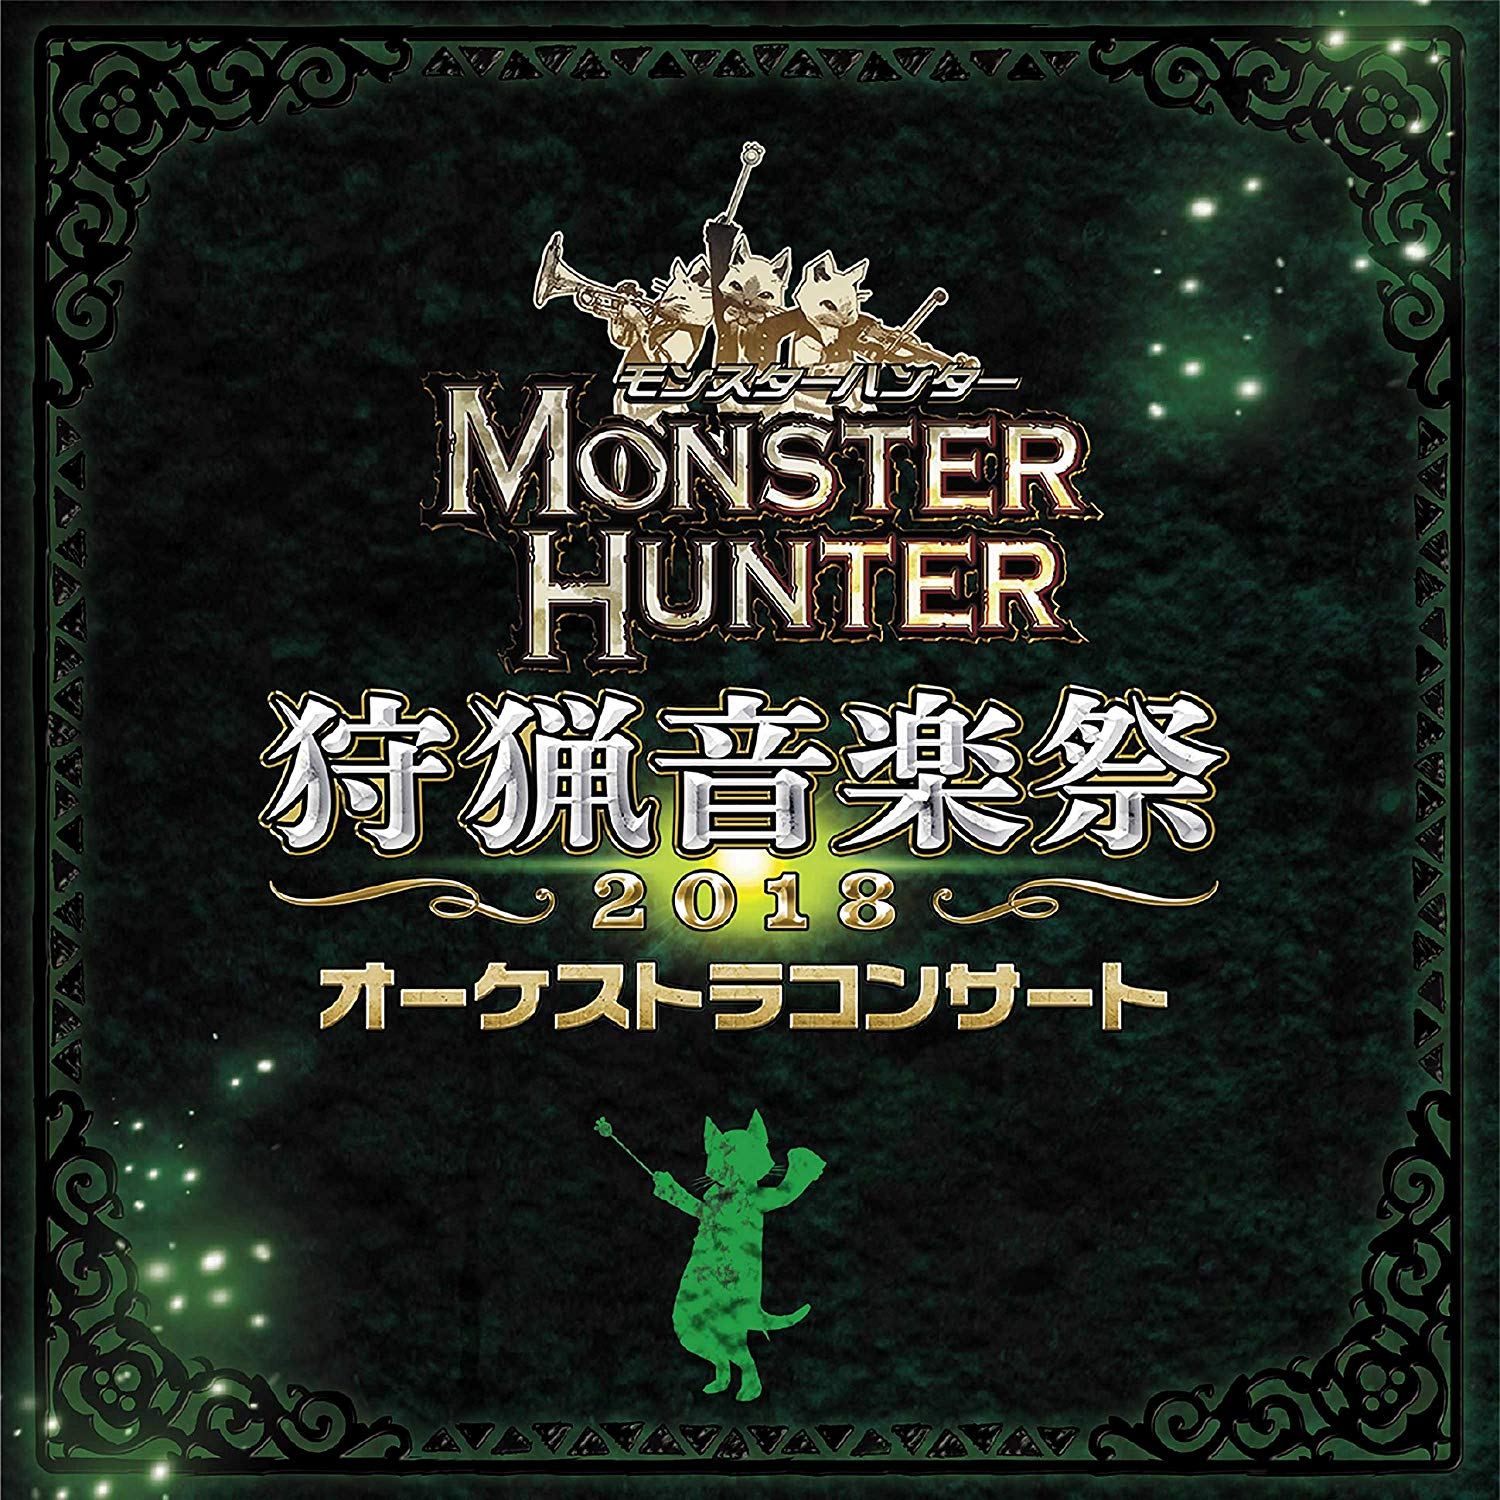 Monster Hunter Orchestra Concert Hunting Music Festival 2018